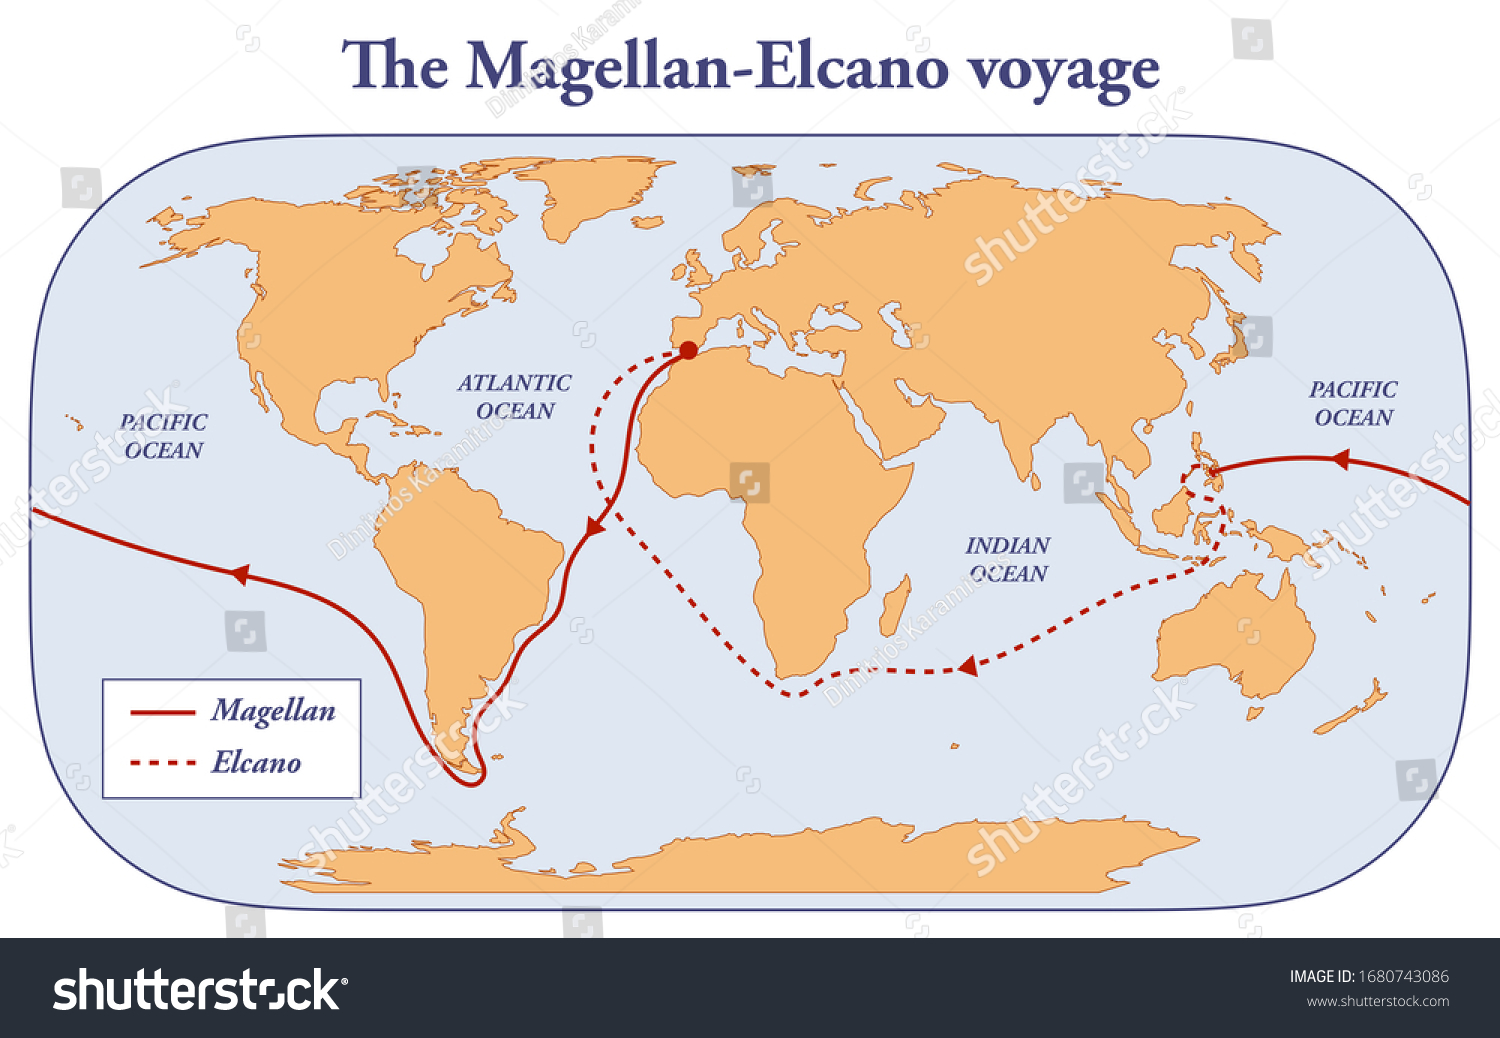 1,767 Magellan ship Images, Stock Photos & Vectors | Shutterstock